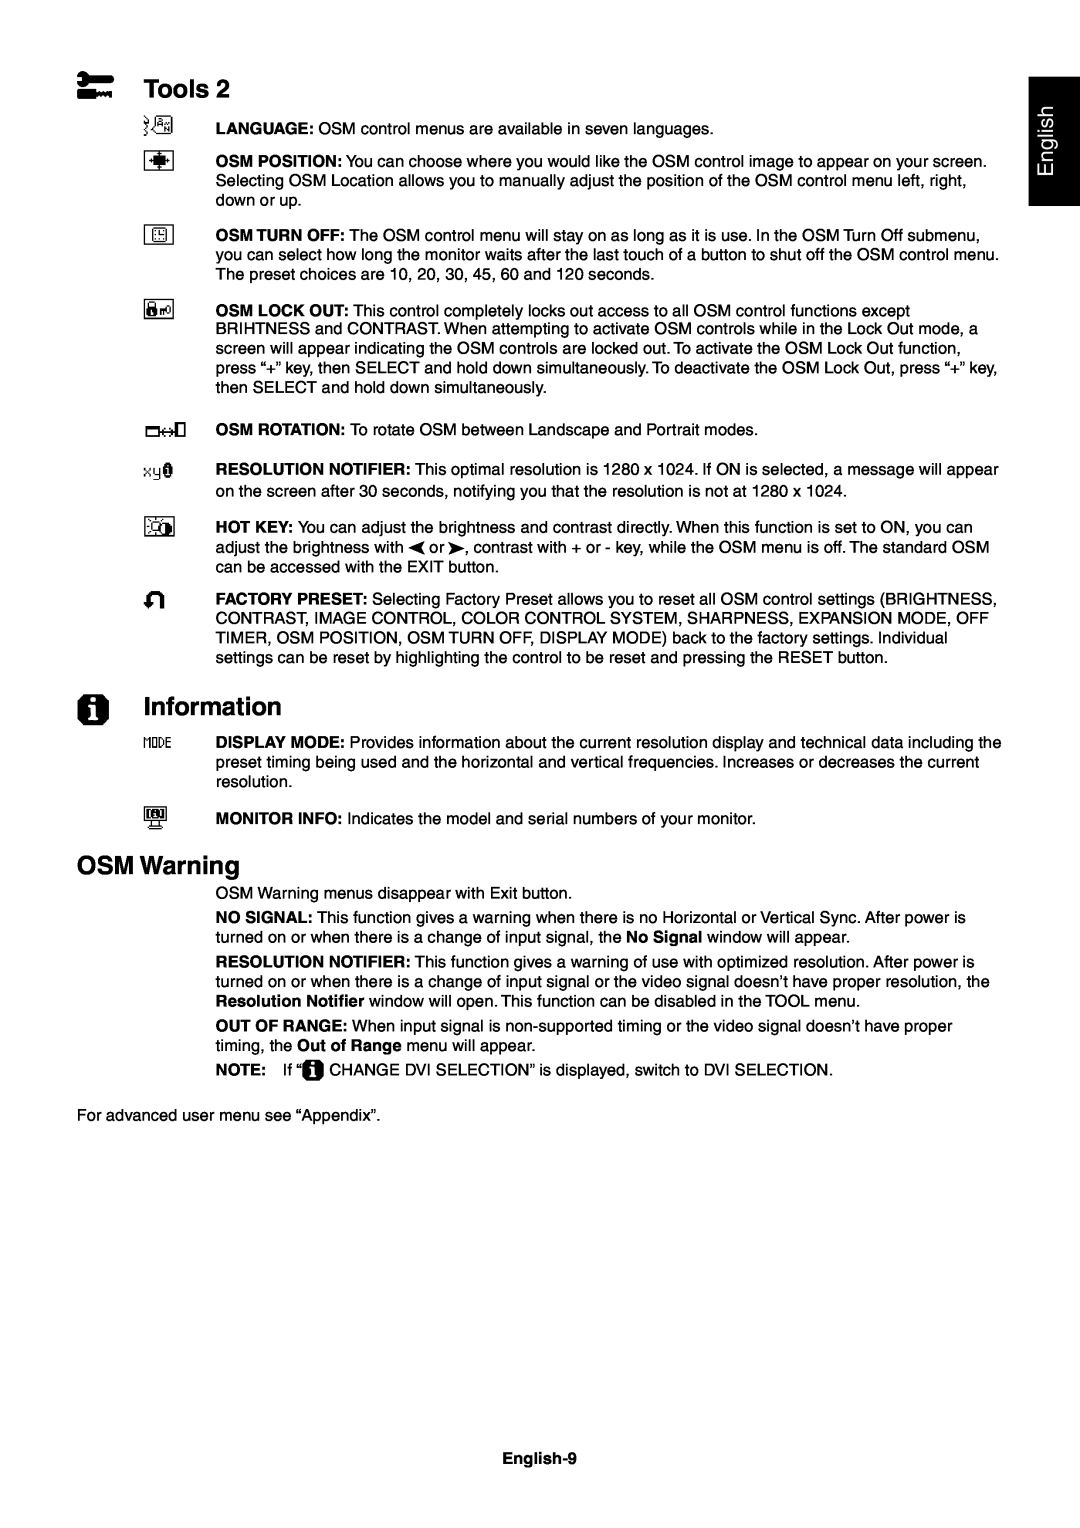 NEC LCD1980SX user manual Information, OSM Warning, Tools, English-9 